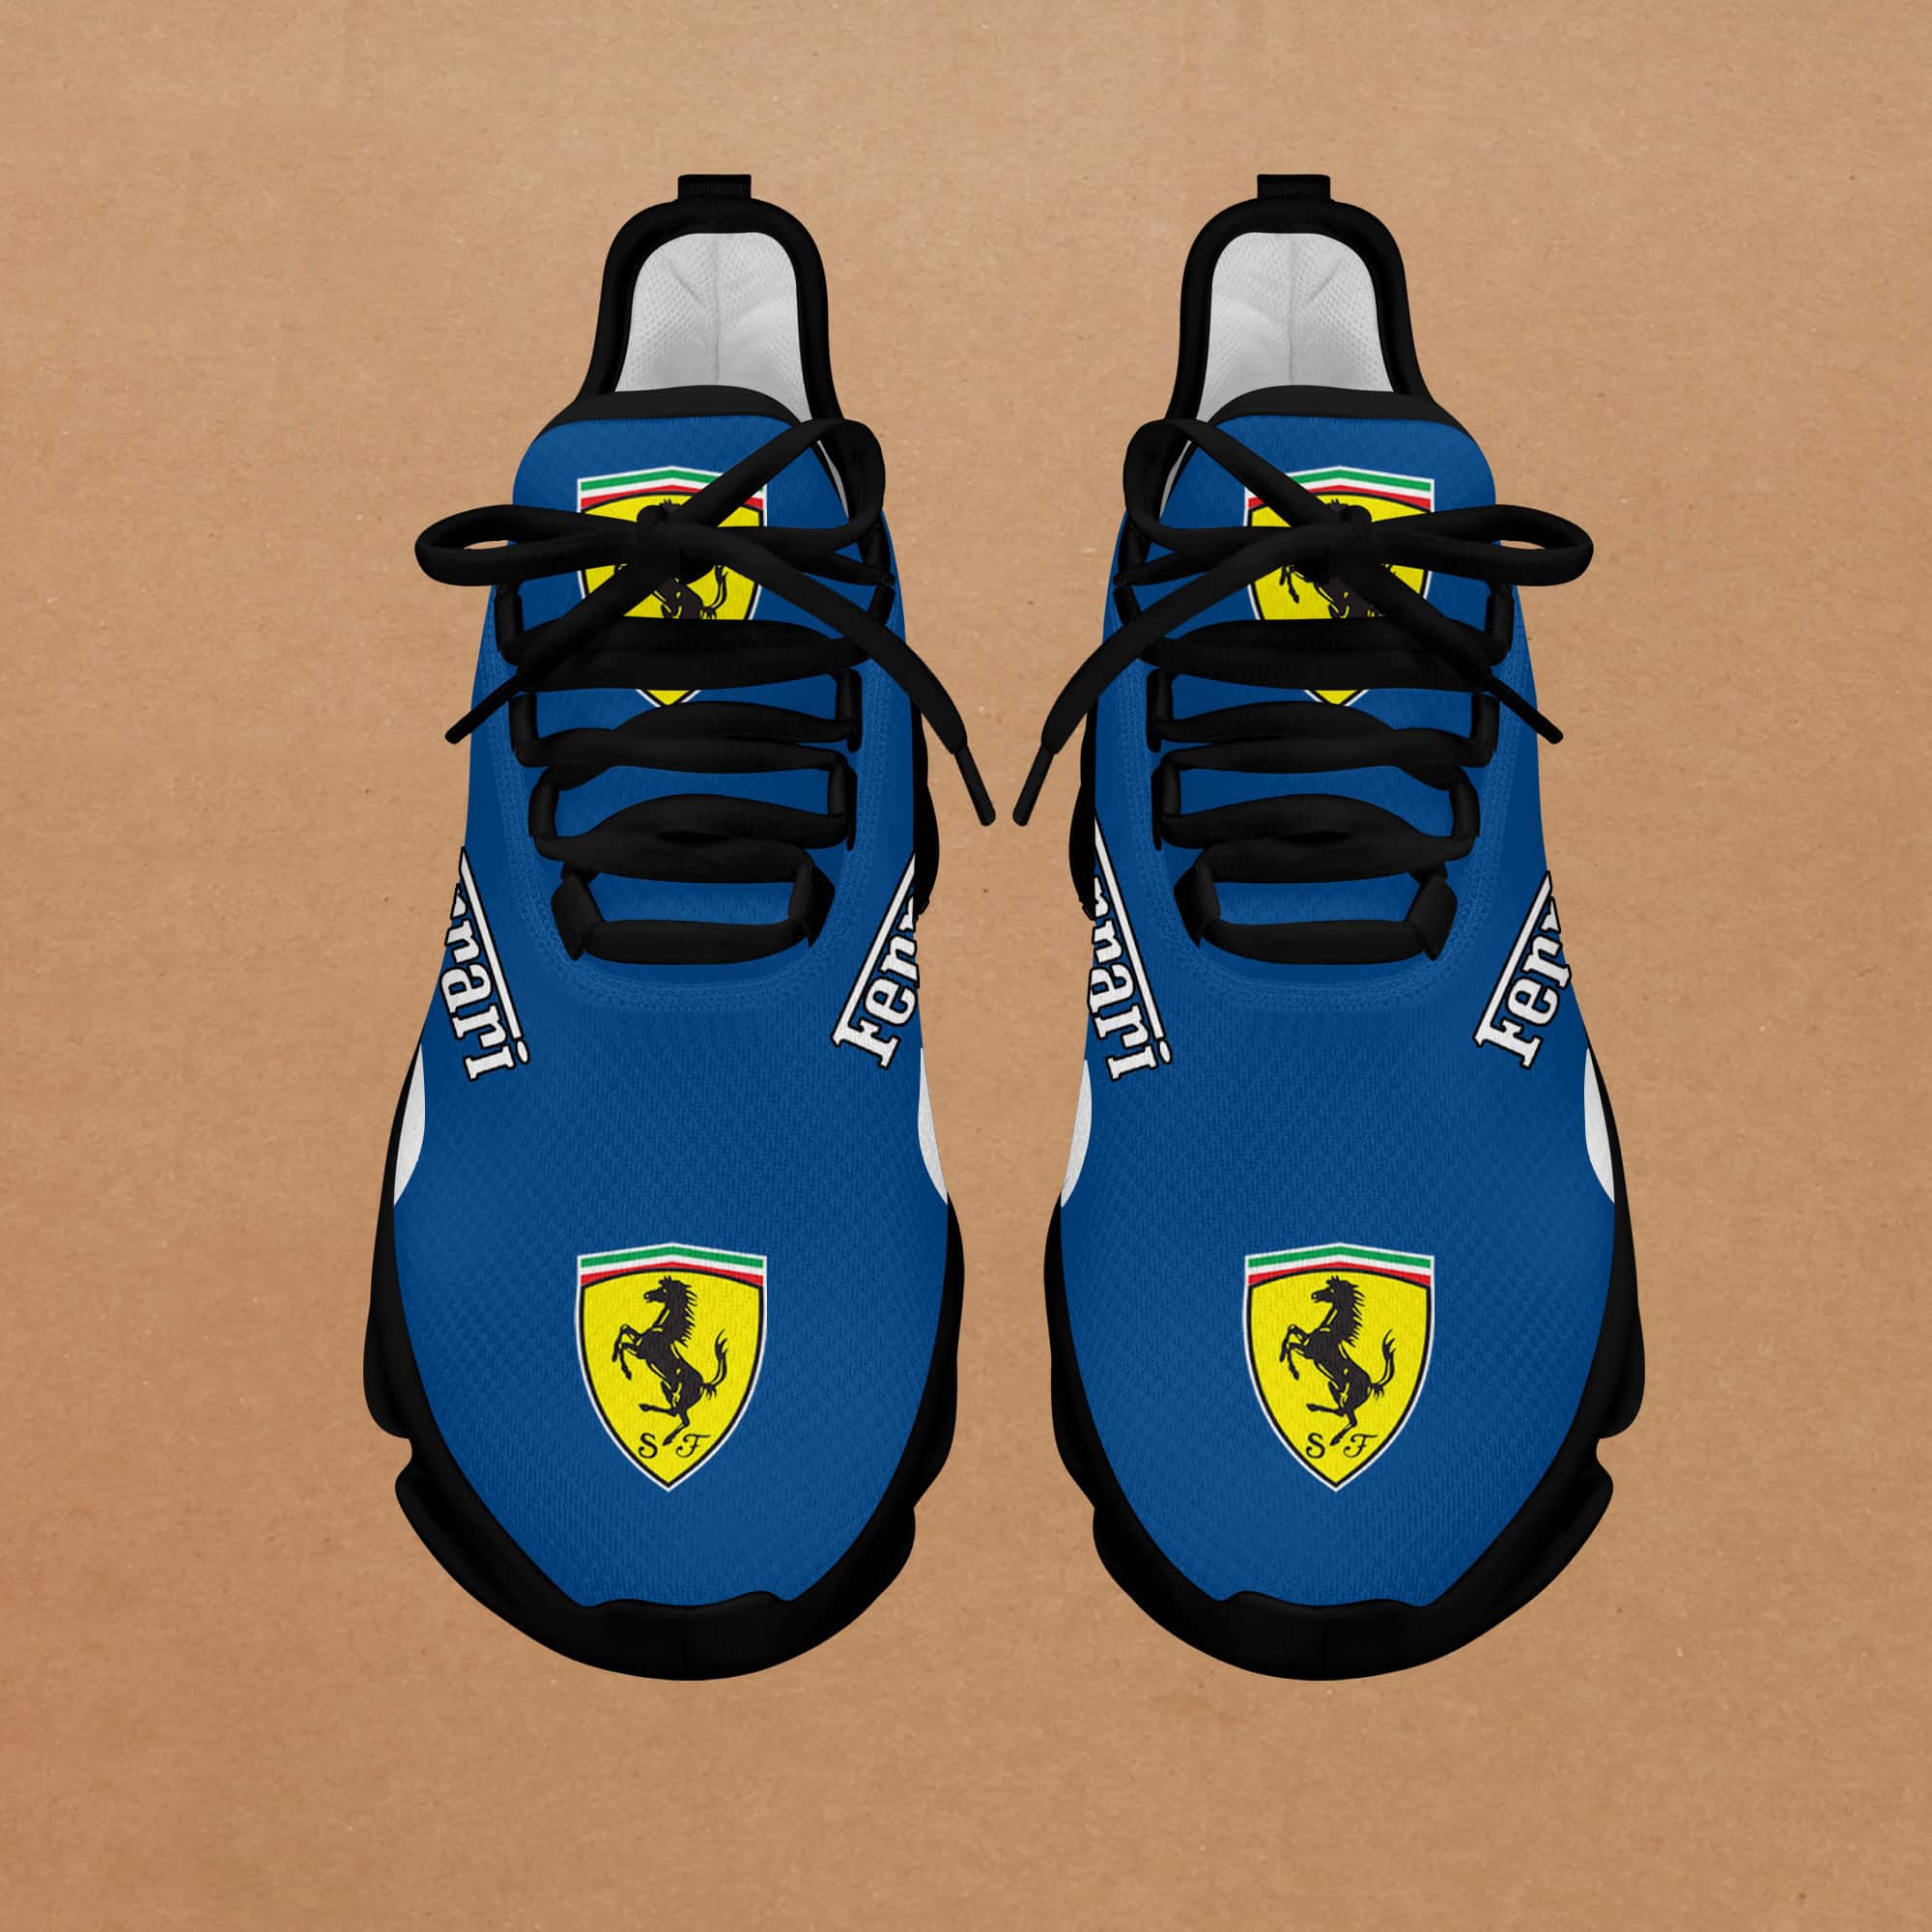 Ferrari Sneaker Running Shoes Max Soul Shoes Sneakers Ver 4 4